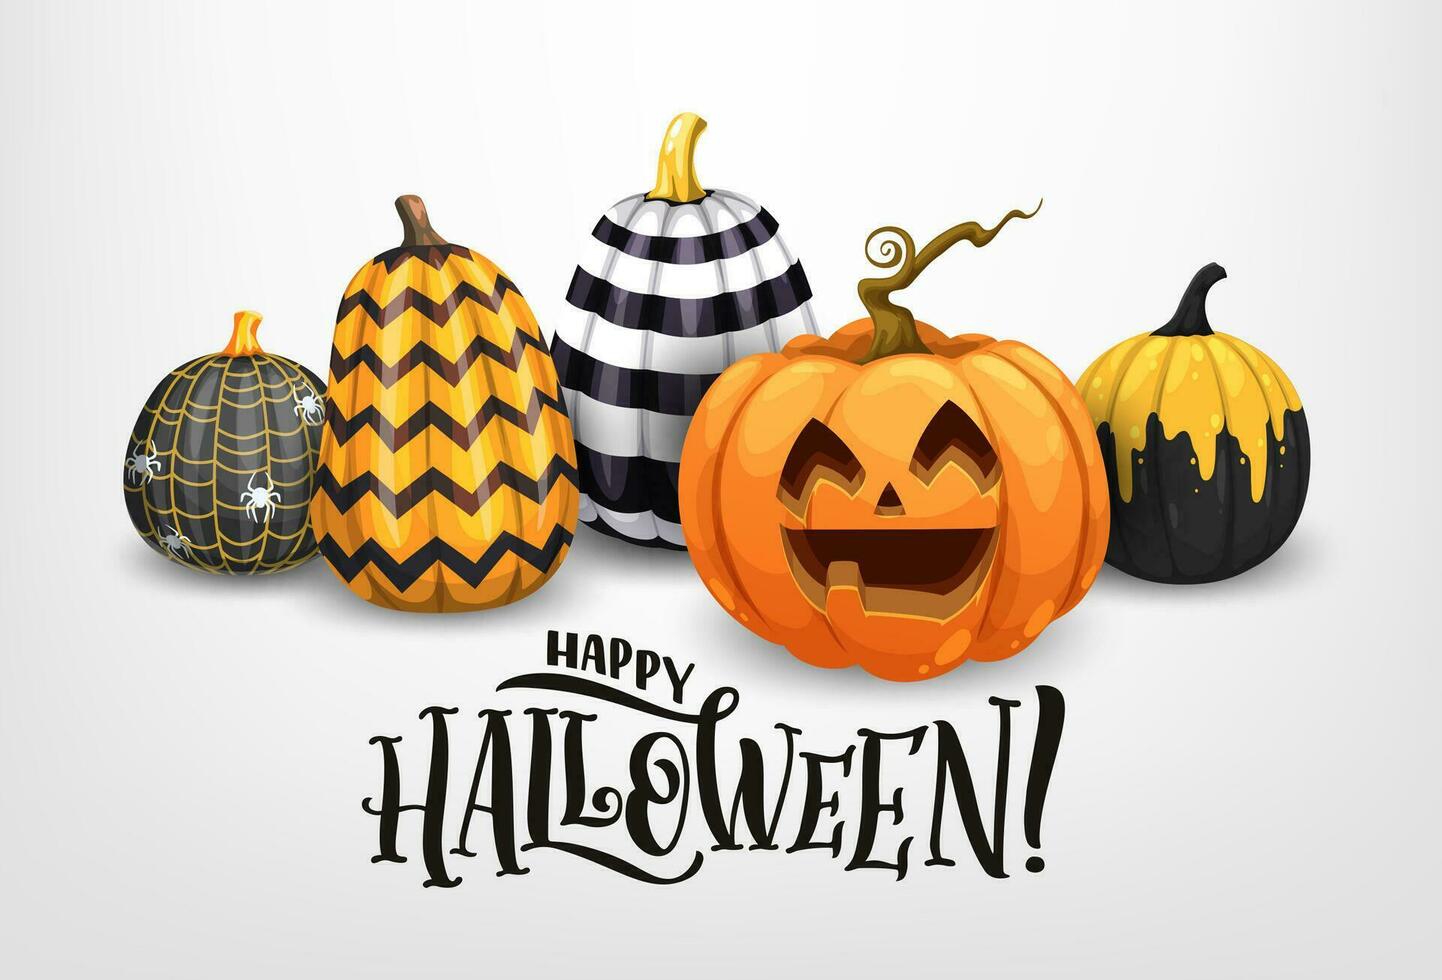 Cartoon Halloween pumpkins with holiday ornament vector